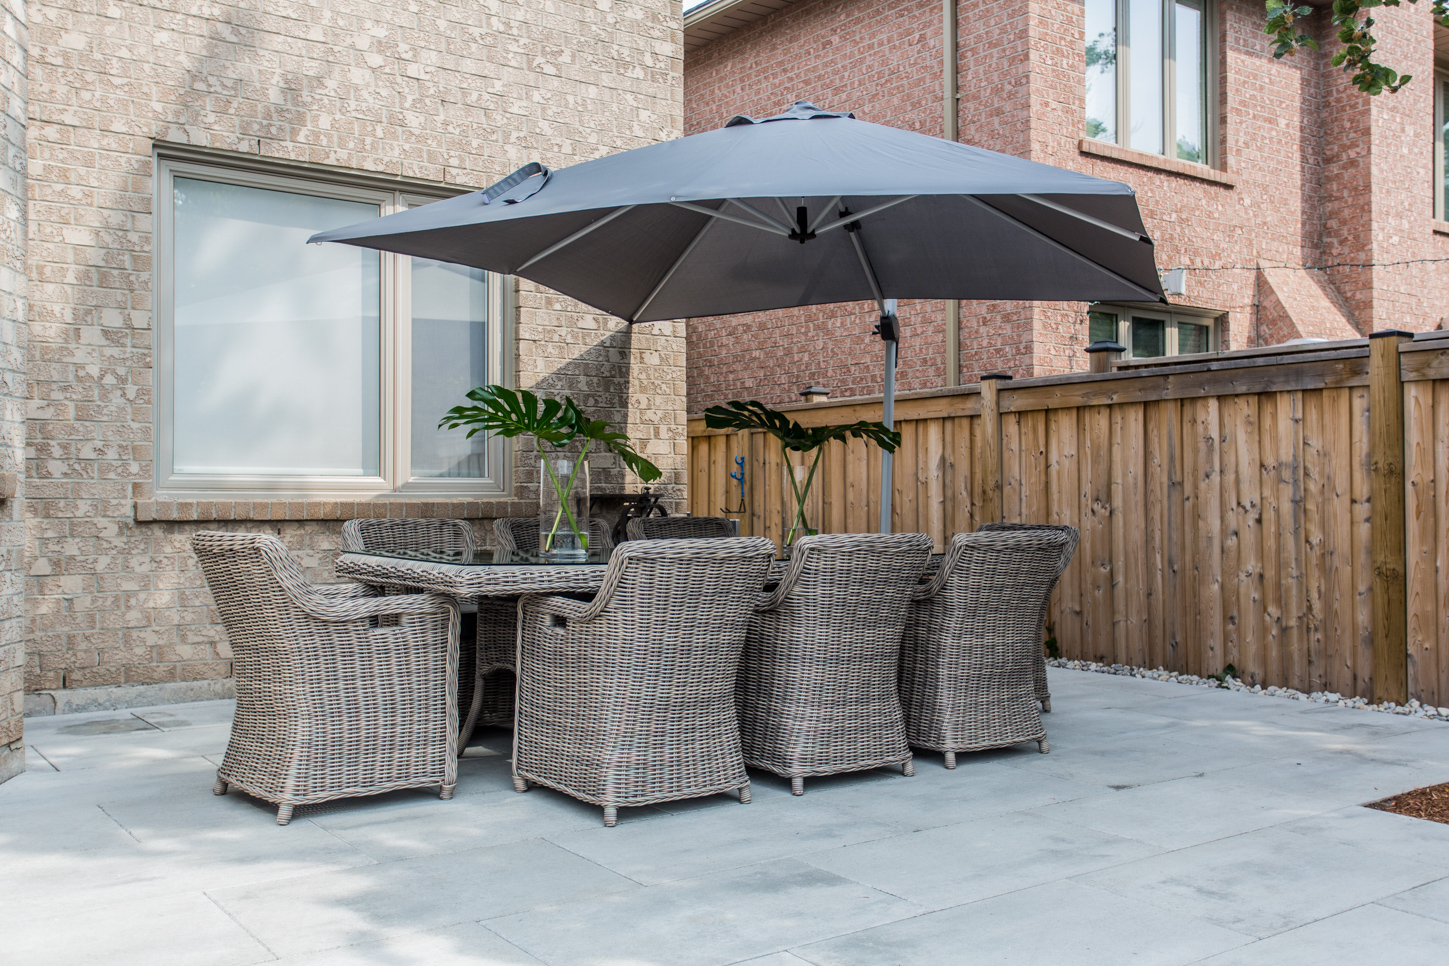 Backyard patio with wicker dining set under an umbrella